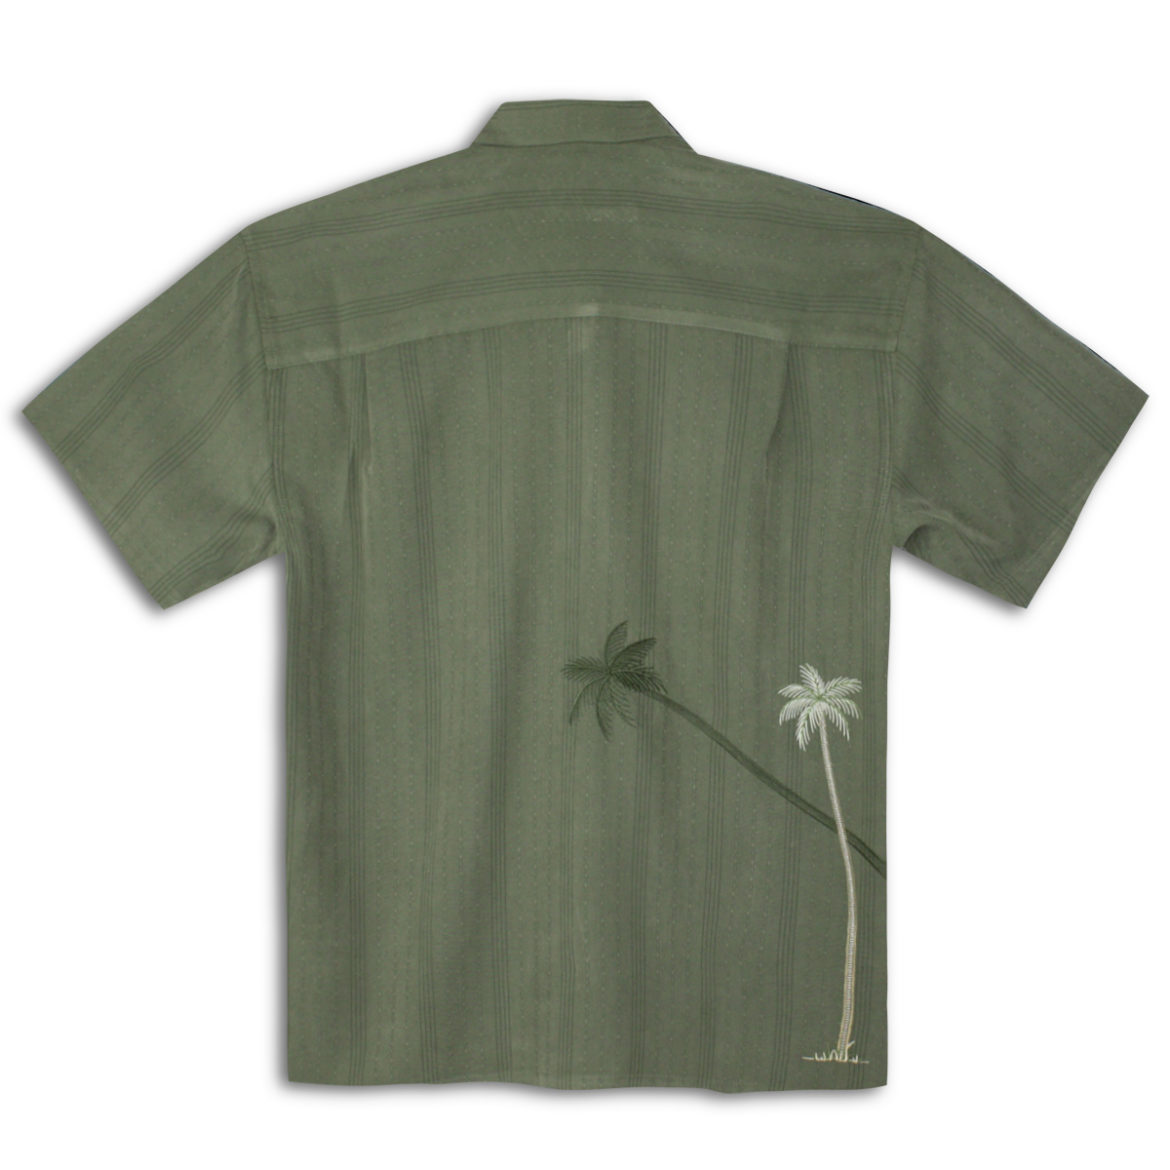 Bamboo Cay - Men's Shirt- Flying Palms - Olive - Back -